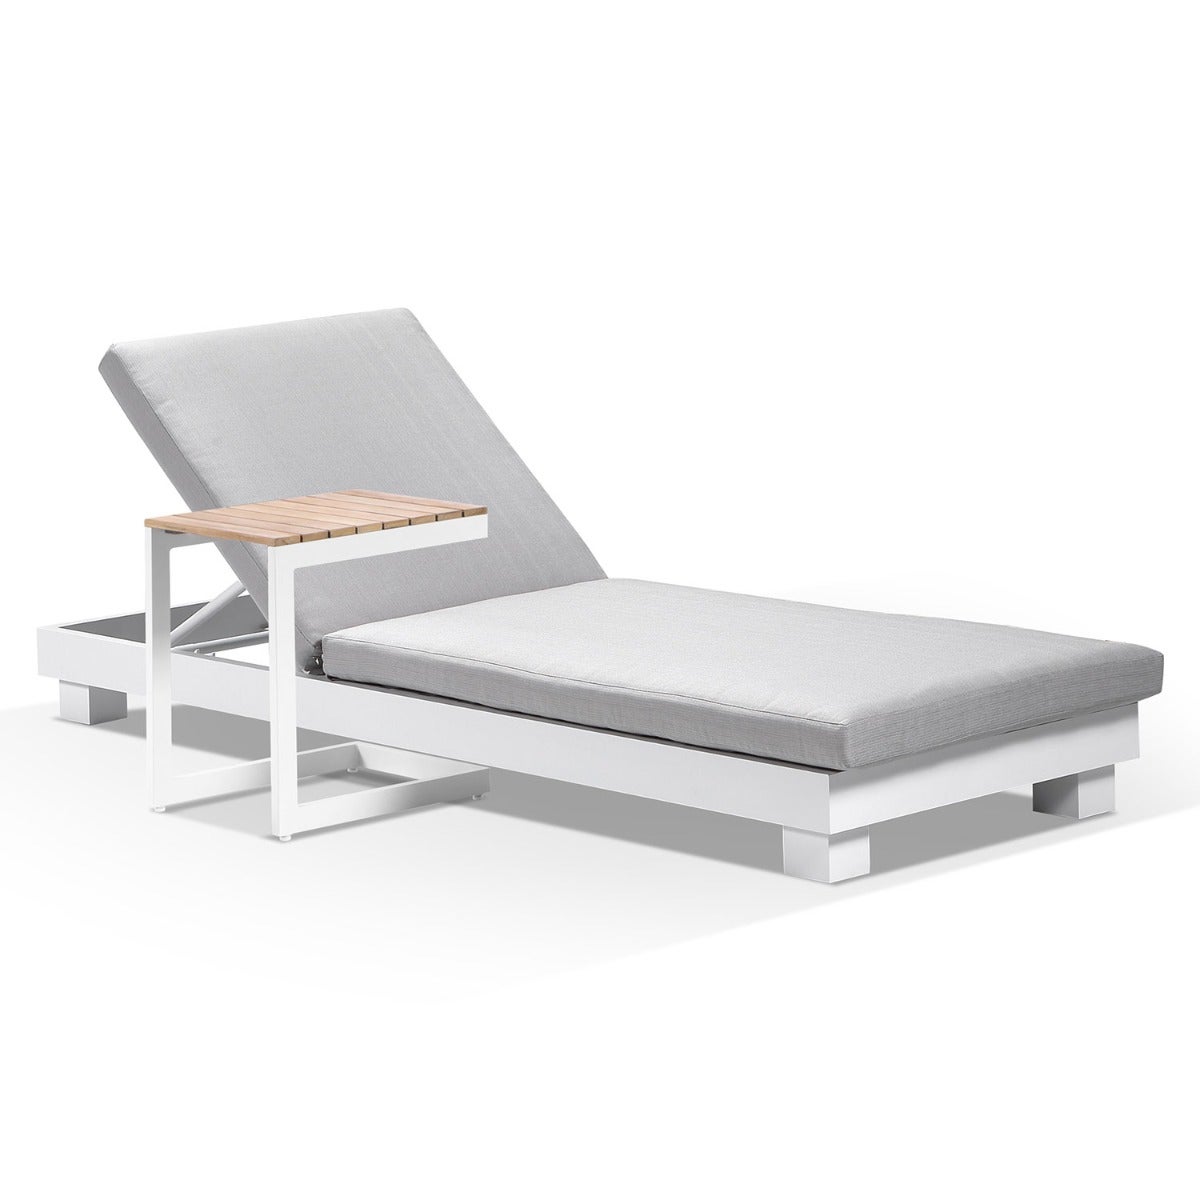 Santorini Aluminium Sun Lounge With Side Table In White W/ Light Grey Cushion